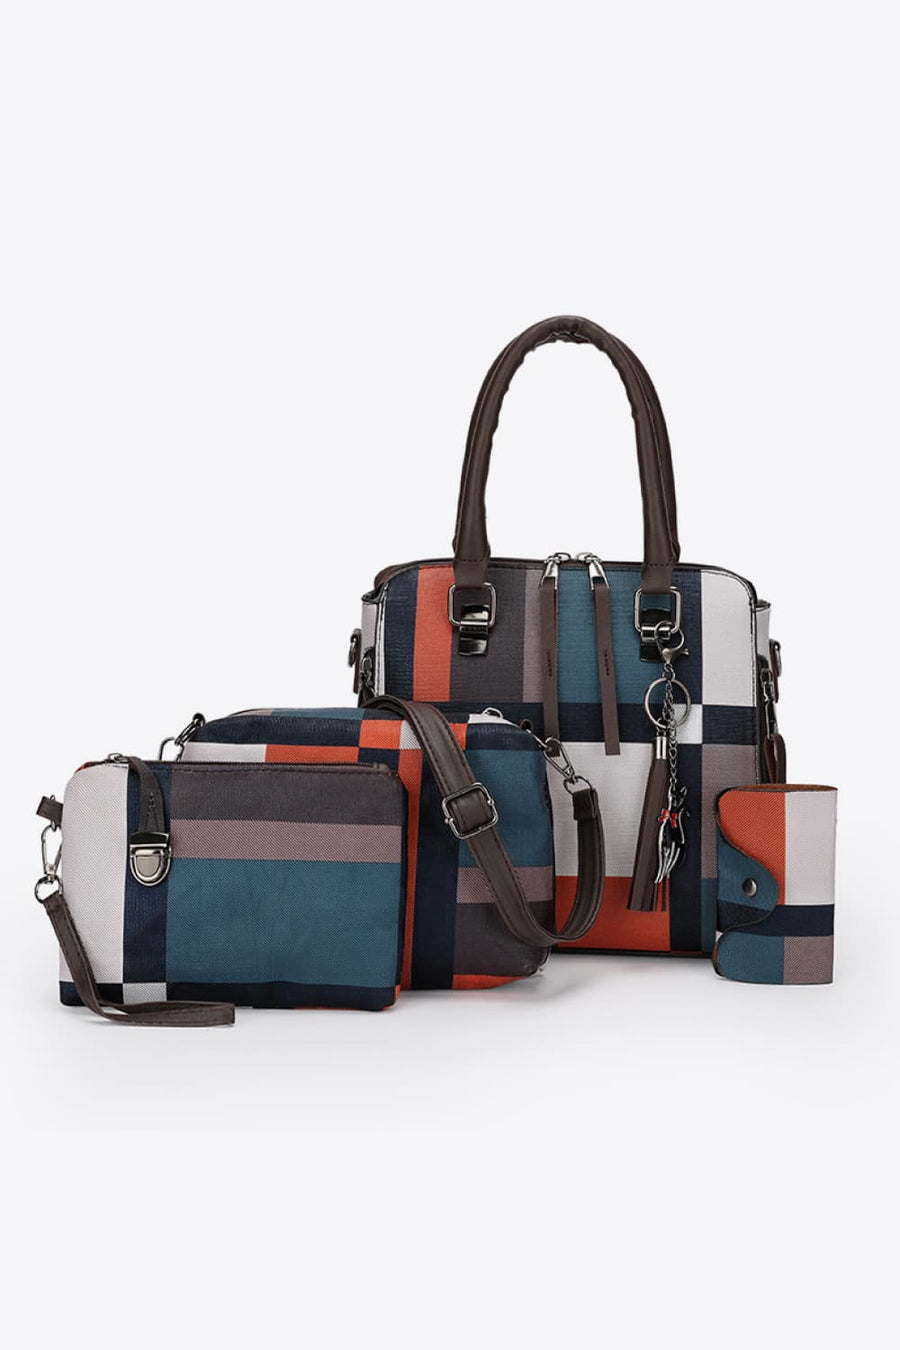 PU Leather Bag Set, Color Block Design, Four-Piece Set, Fashion Accessories, Stylish Handbags, Trendy Purses, Versatile Collection, Modern Design, Functional Accessories, Chic Ensemble